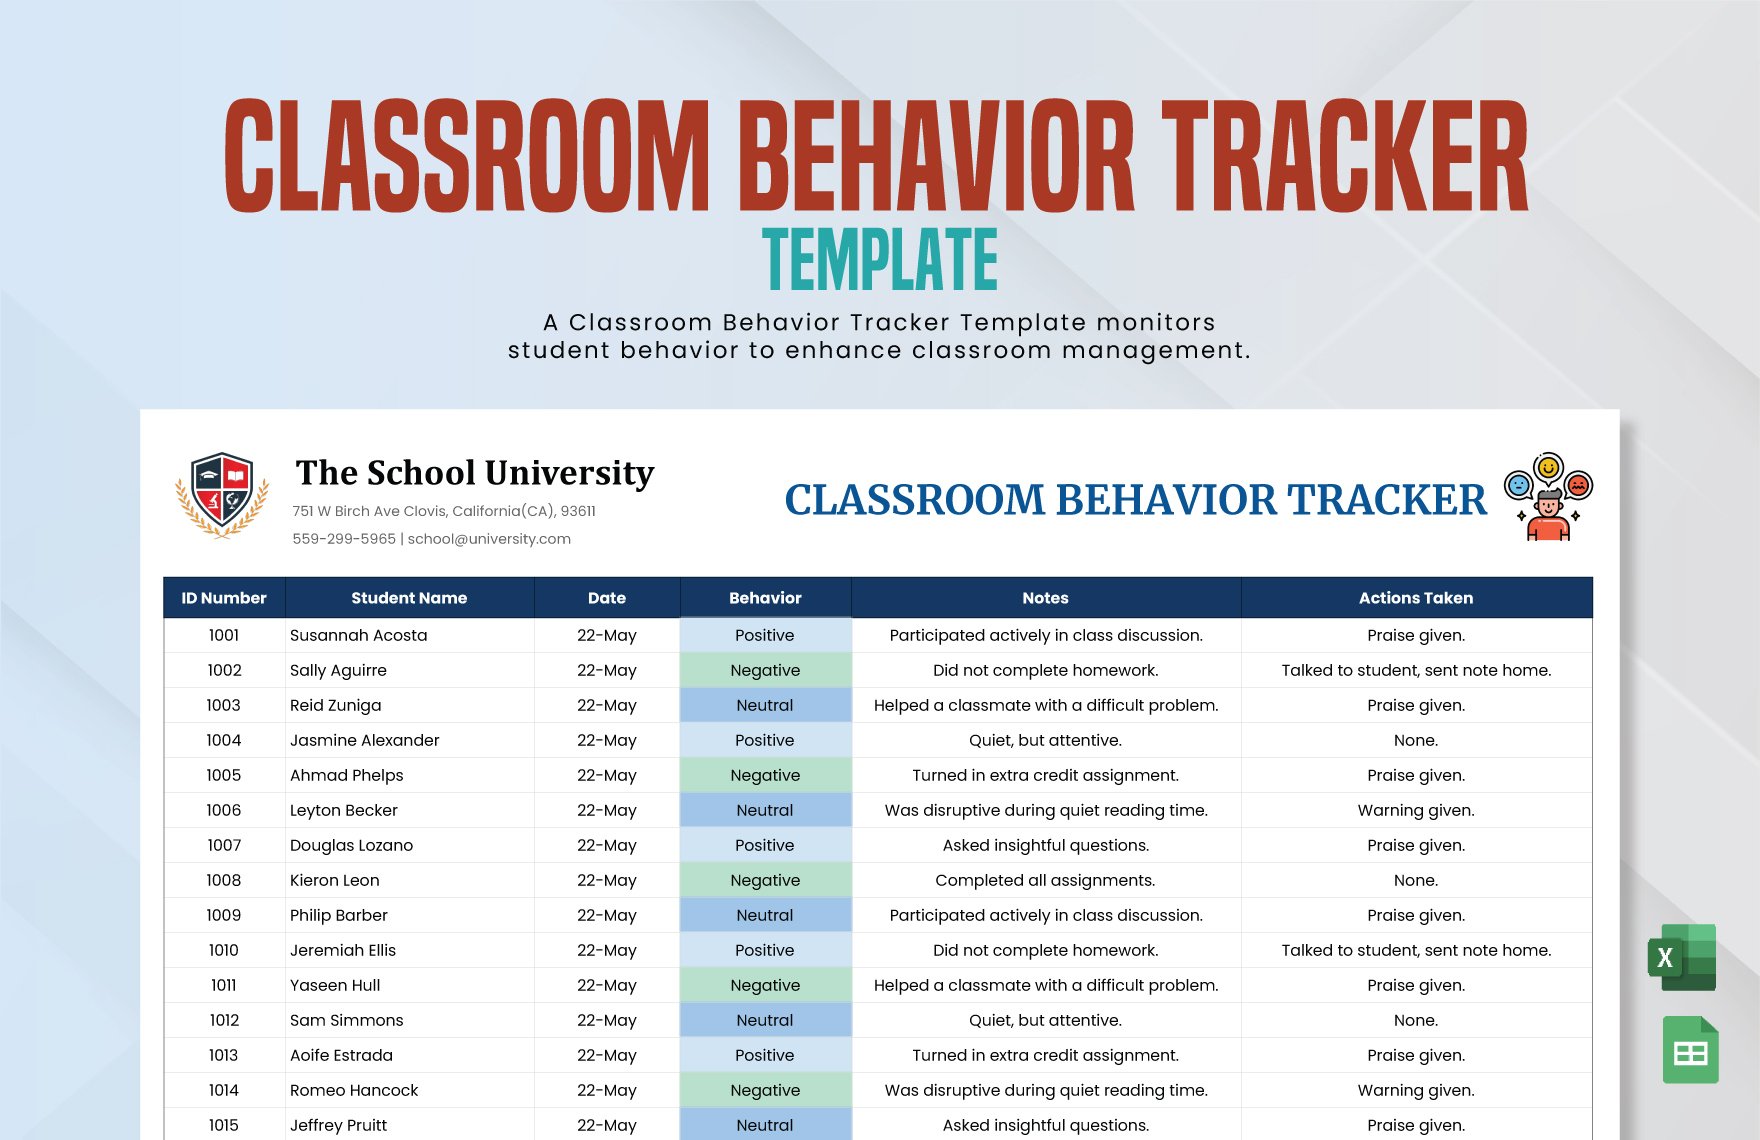 Classroom Behavior Tracker Template in Excel, Google Sheets